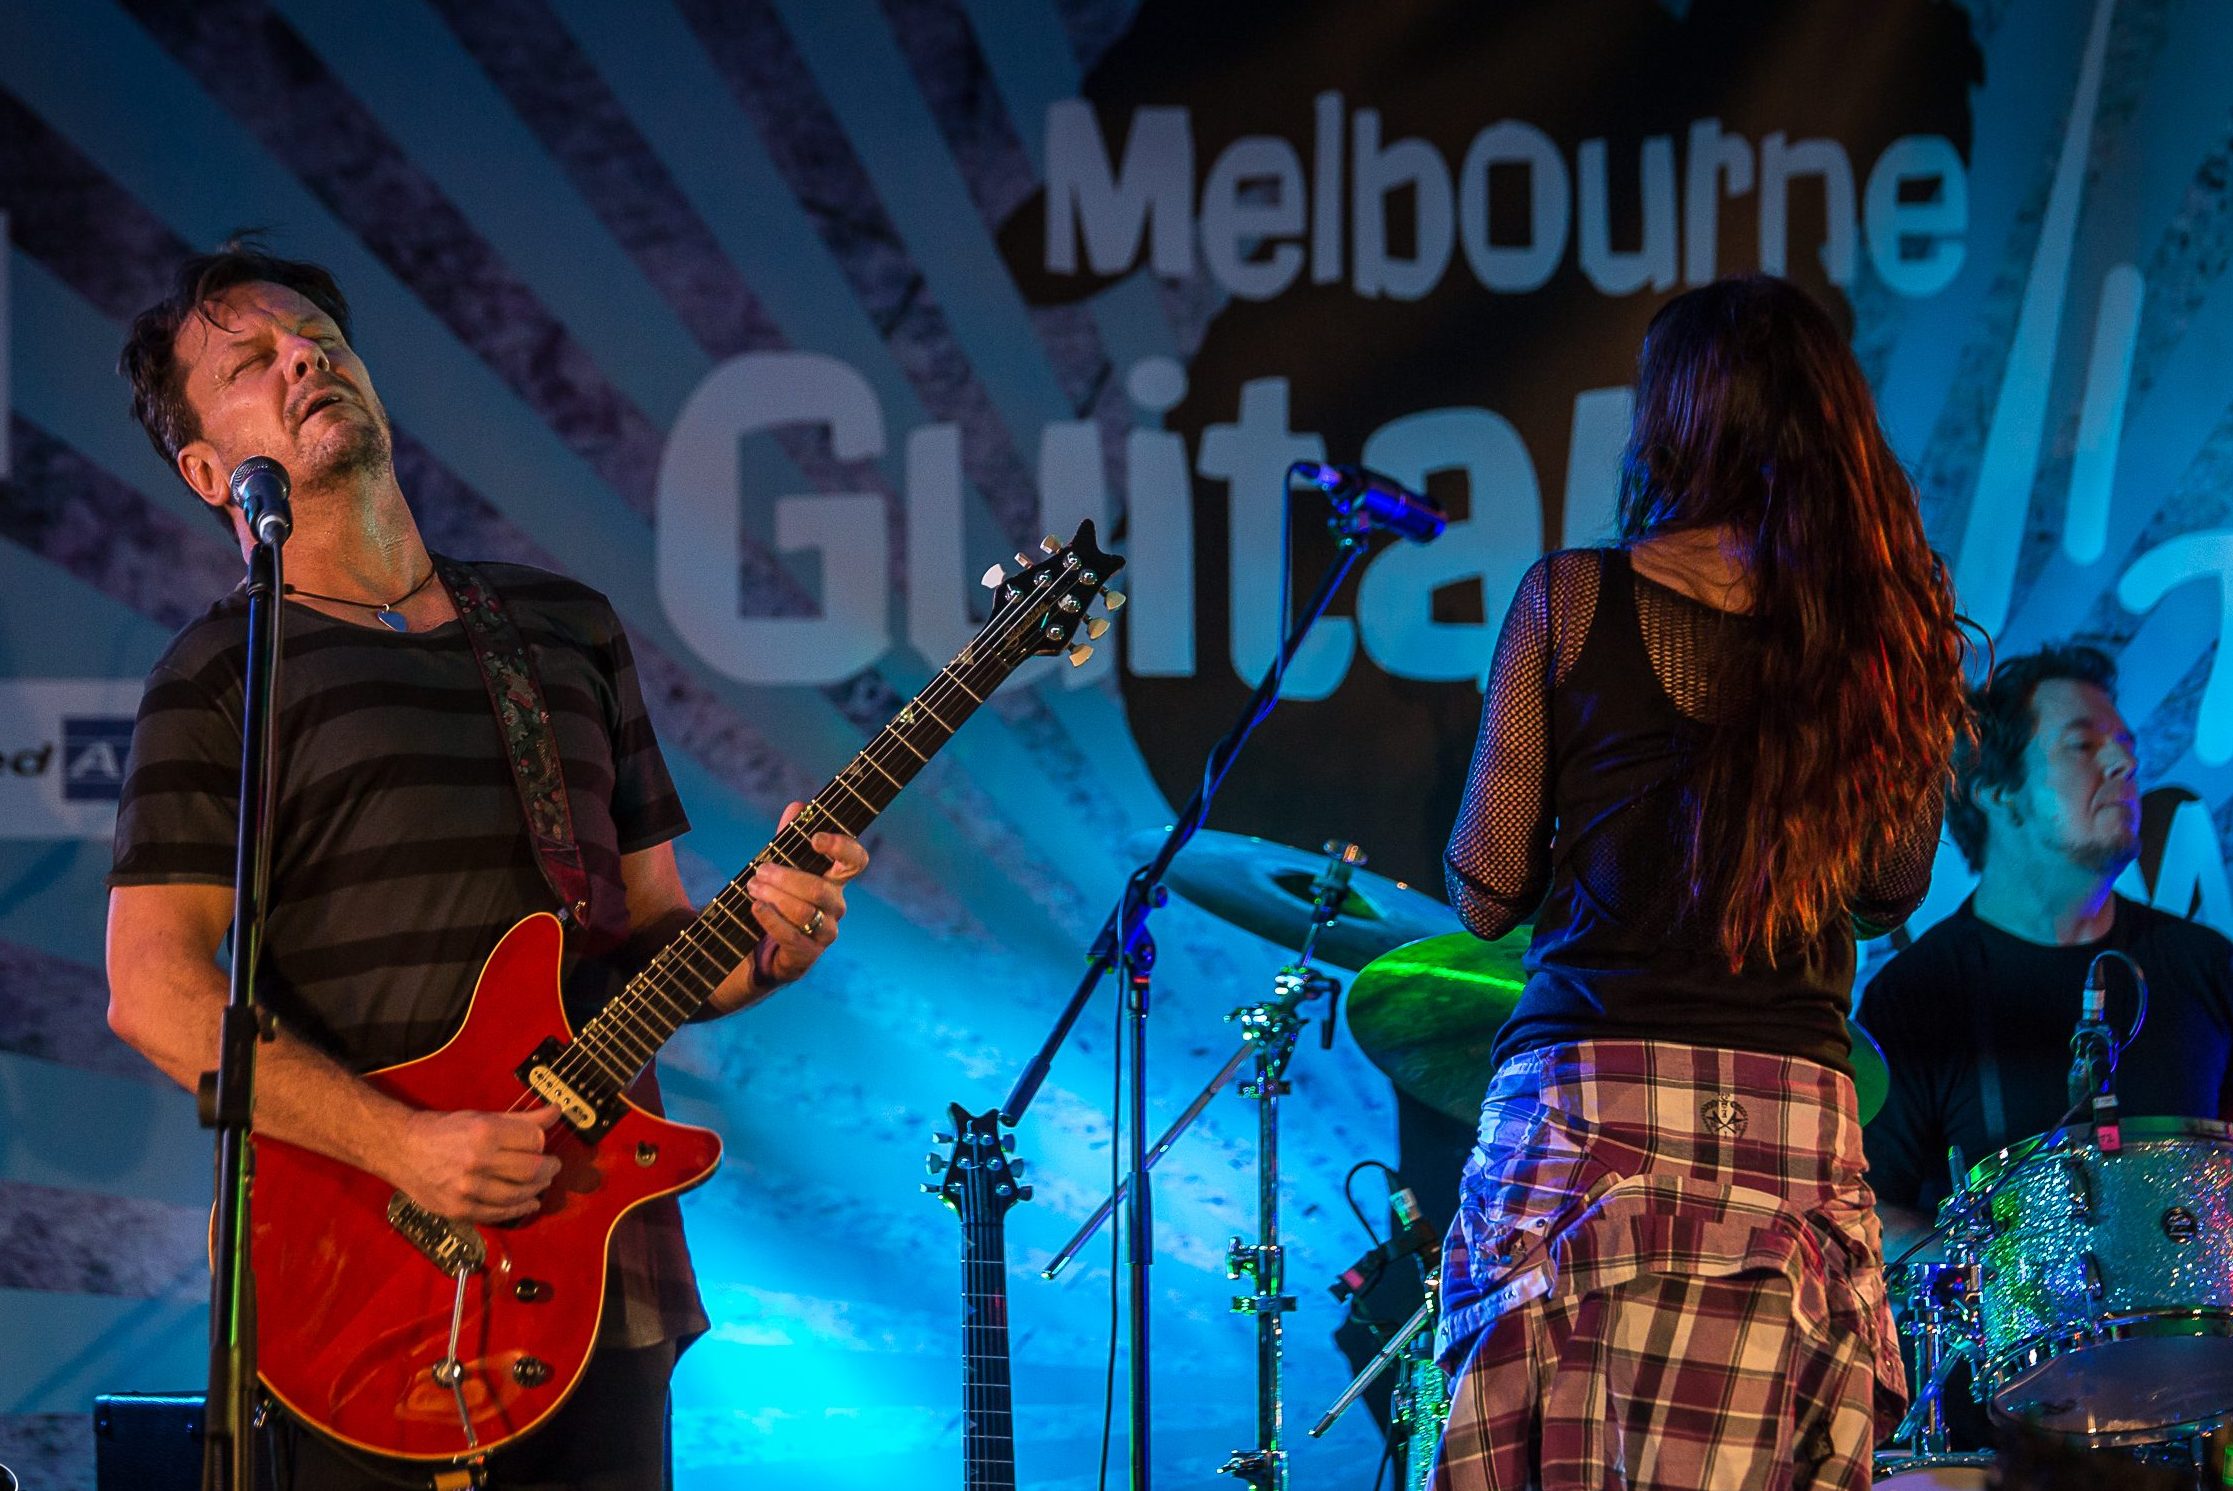 Dave Leslie at the Melbourne Guitar Show